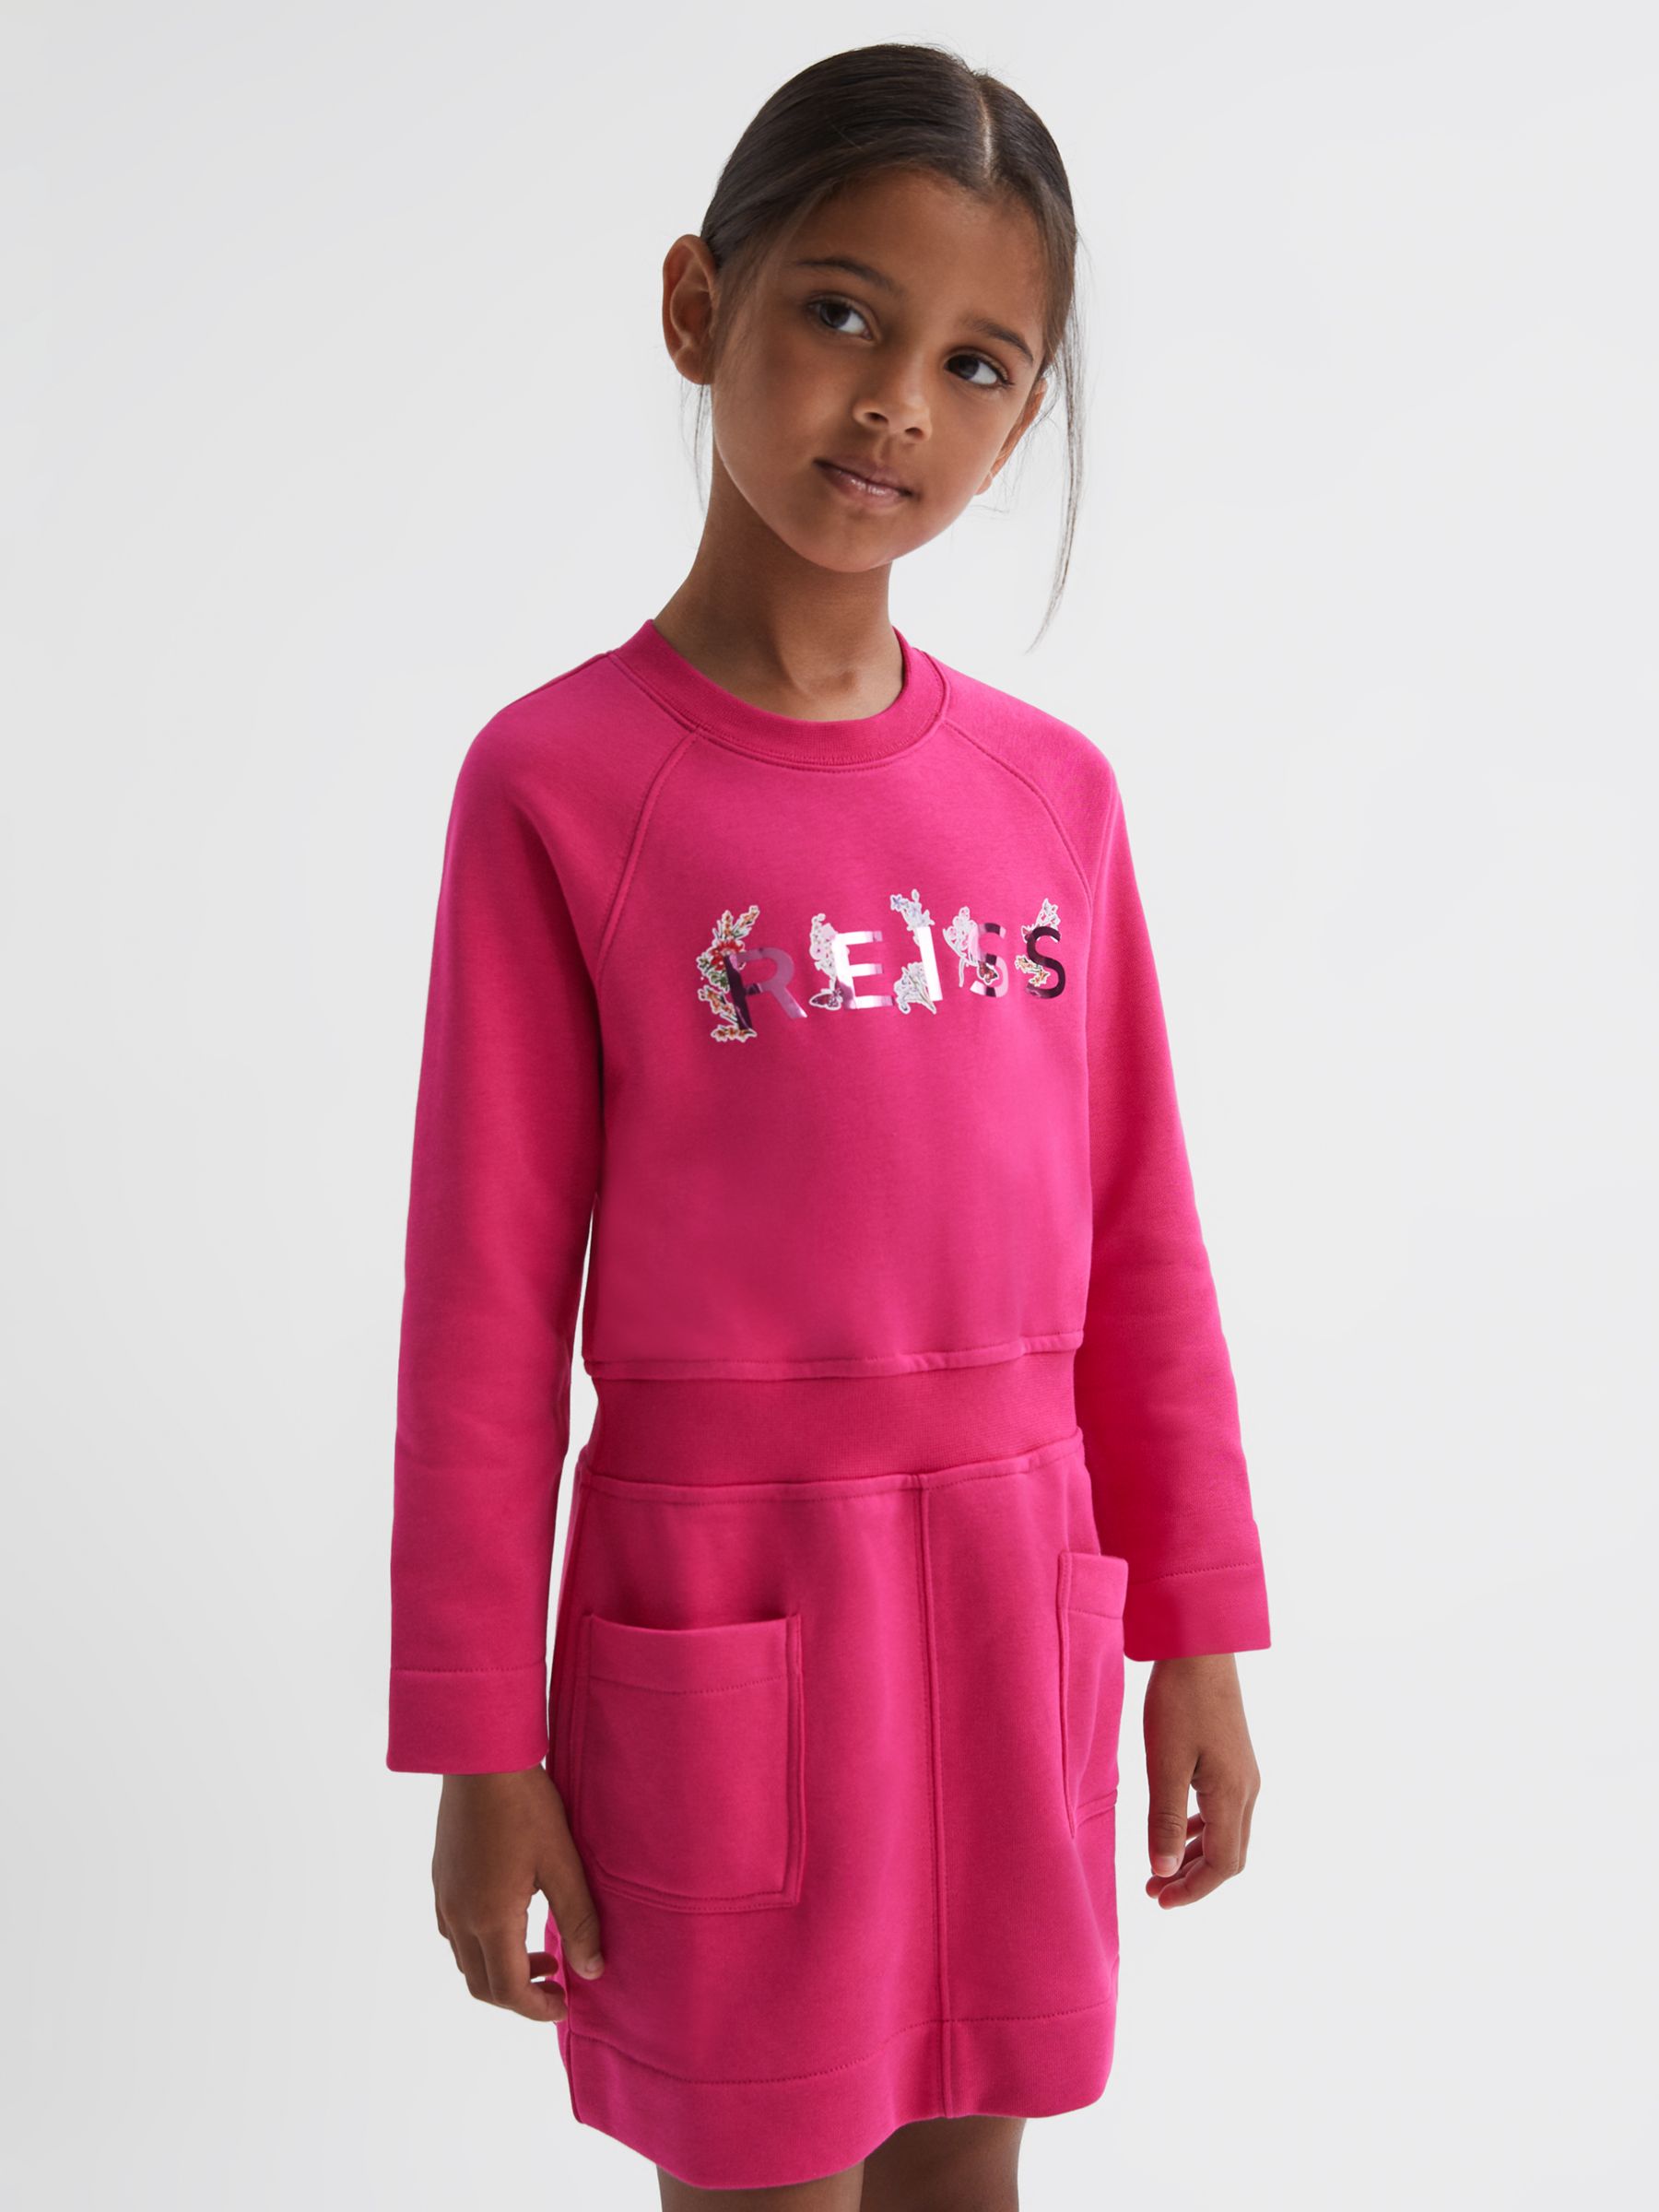 Reiss Kids' Janine Floral Detail Logo Jersey Dress, Pink, 5-6 years